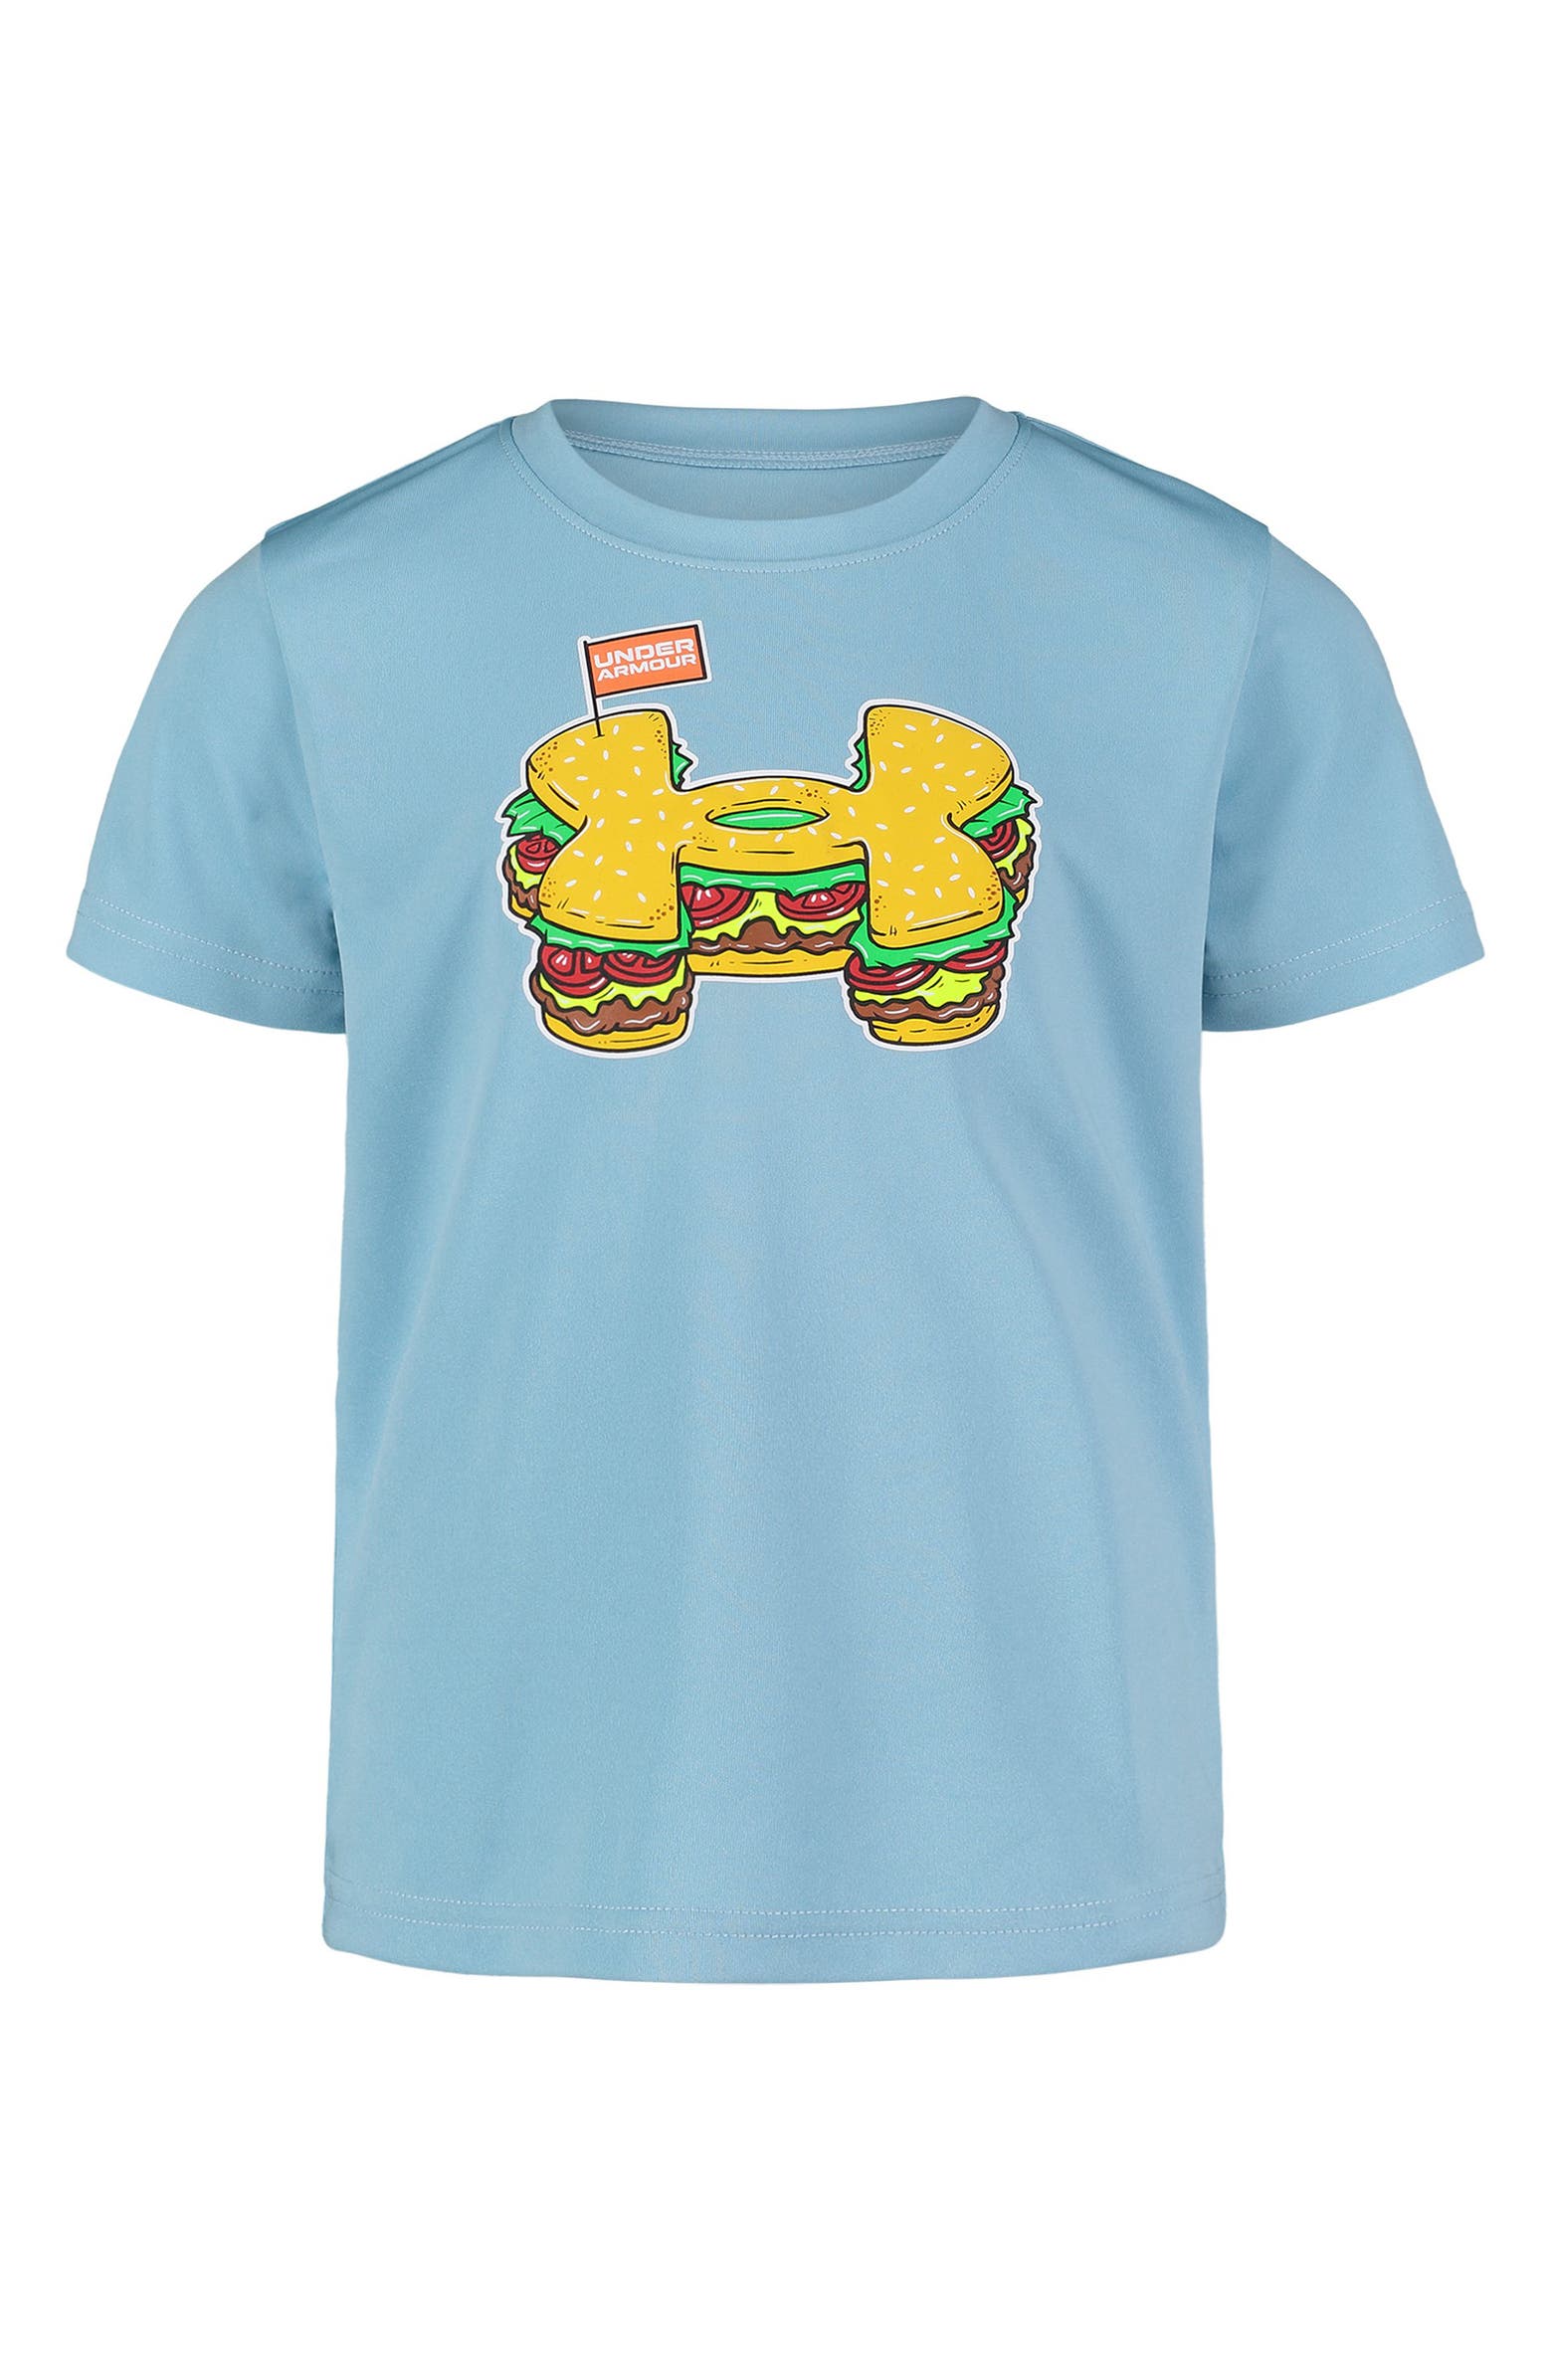 Kids' Burger Logo Performance Graphic T-Shirt